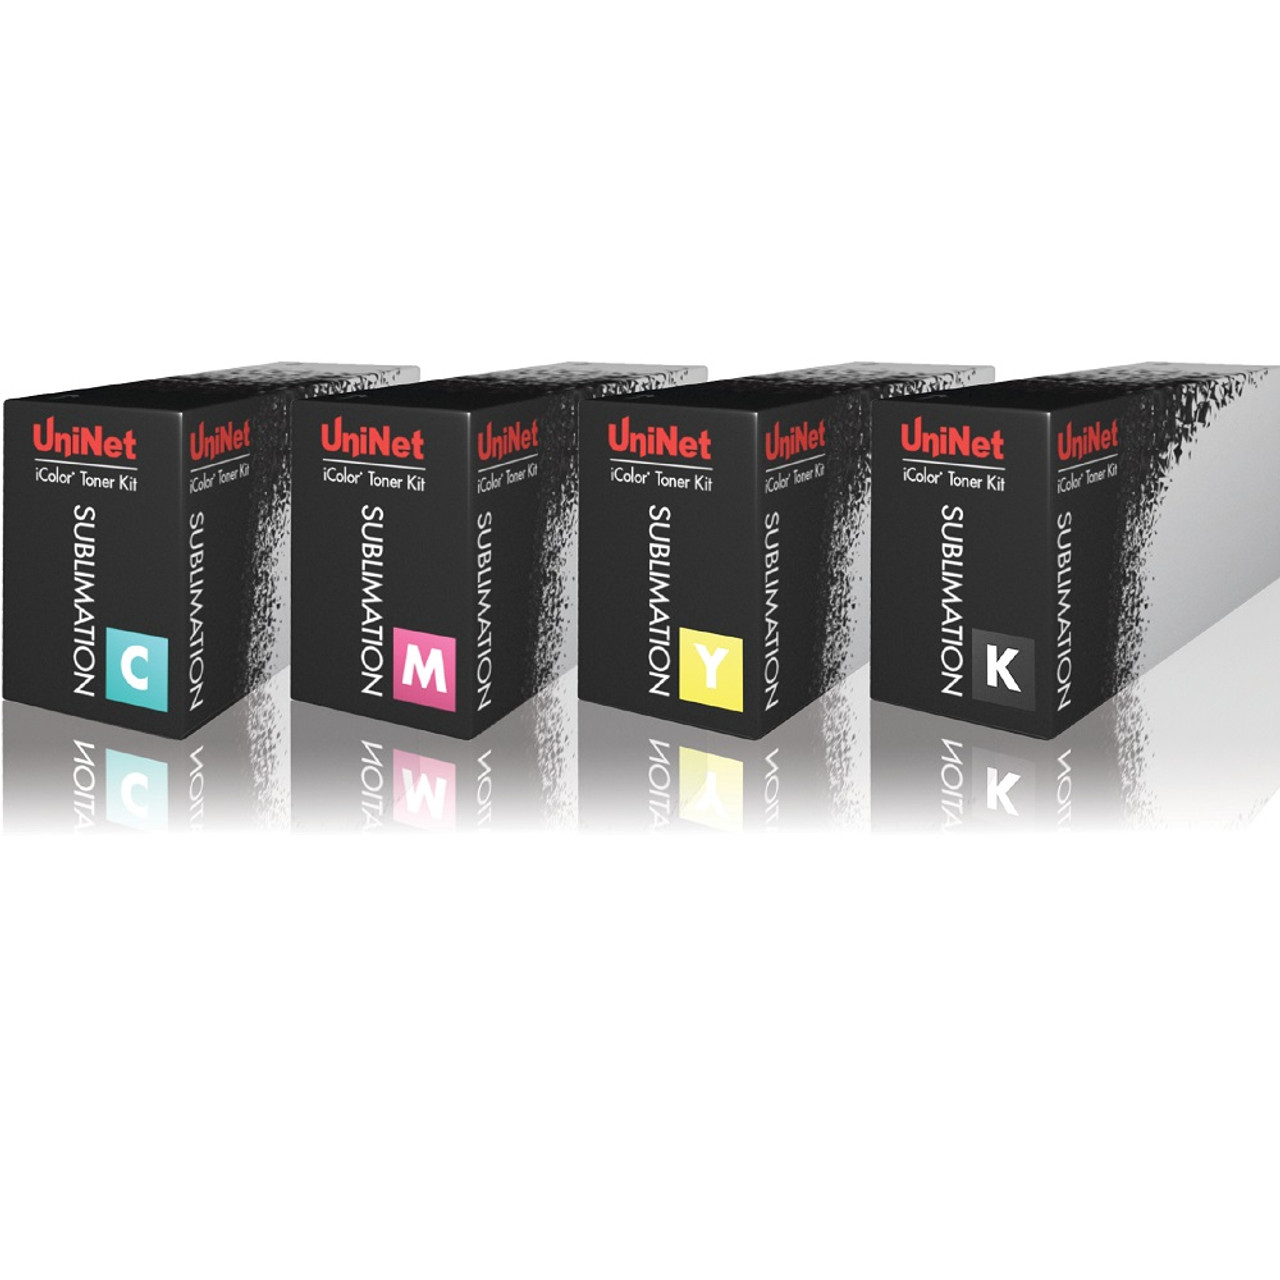 UniNet iColor 550 Sublimation CMYK Starter Toner Starter Cartridge Kit